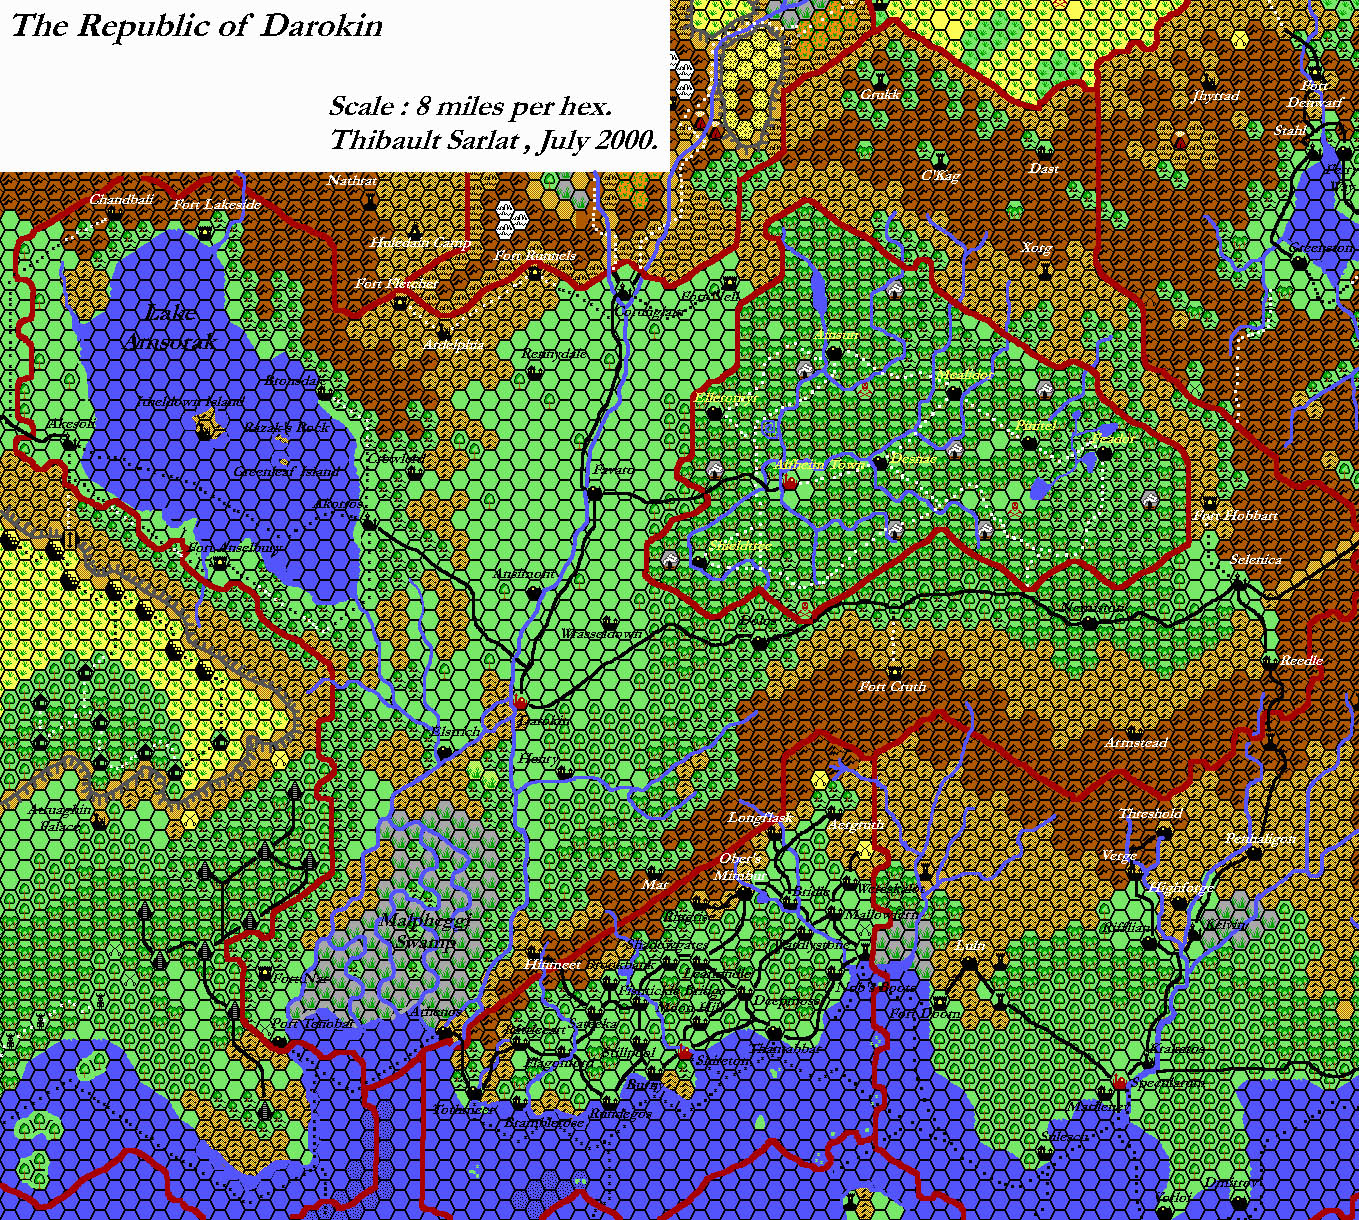 The Republic of Darokin, 8 miles per hex by Thibault Sarlat, September 2001